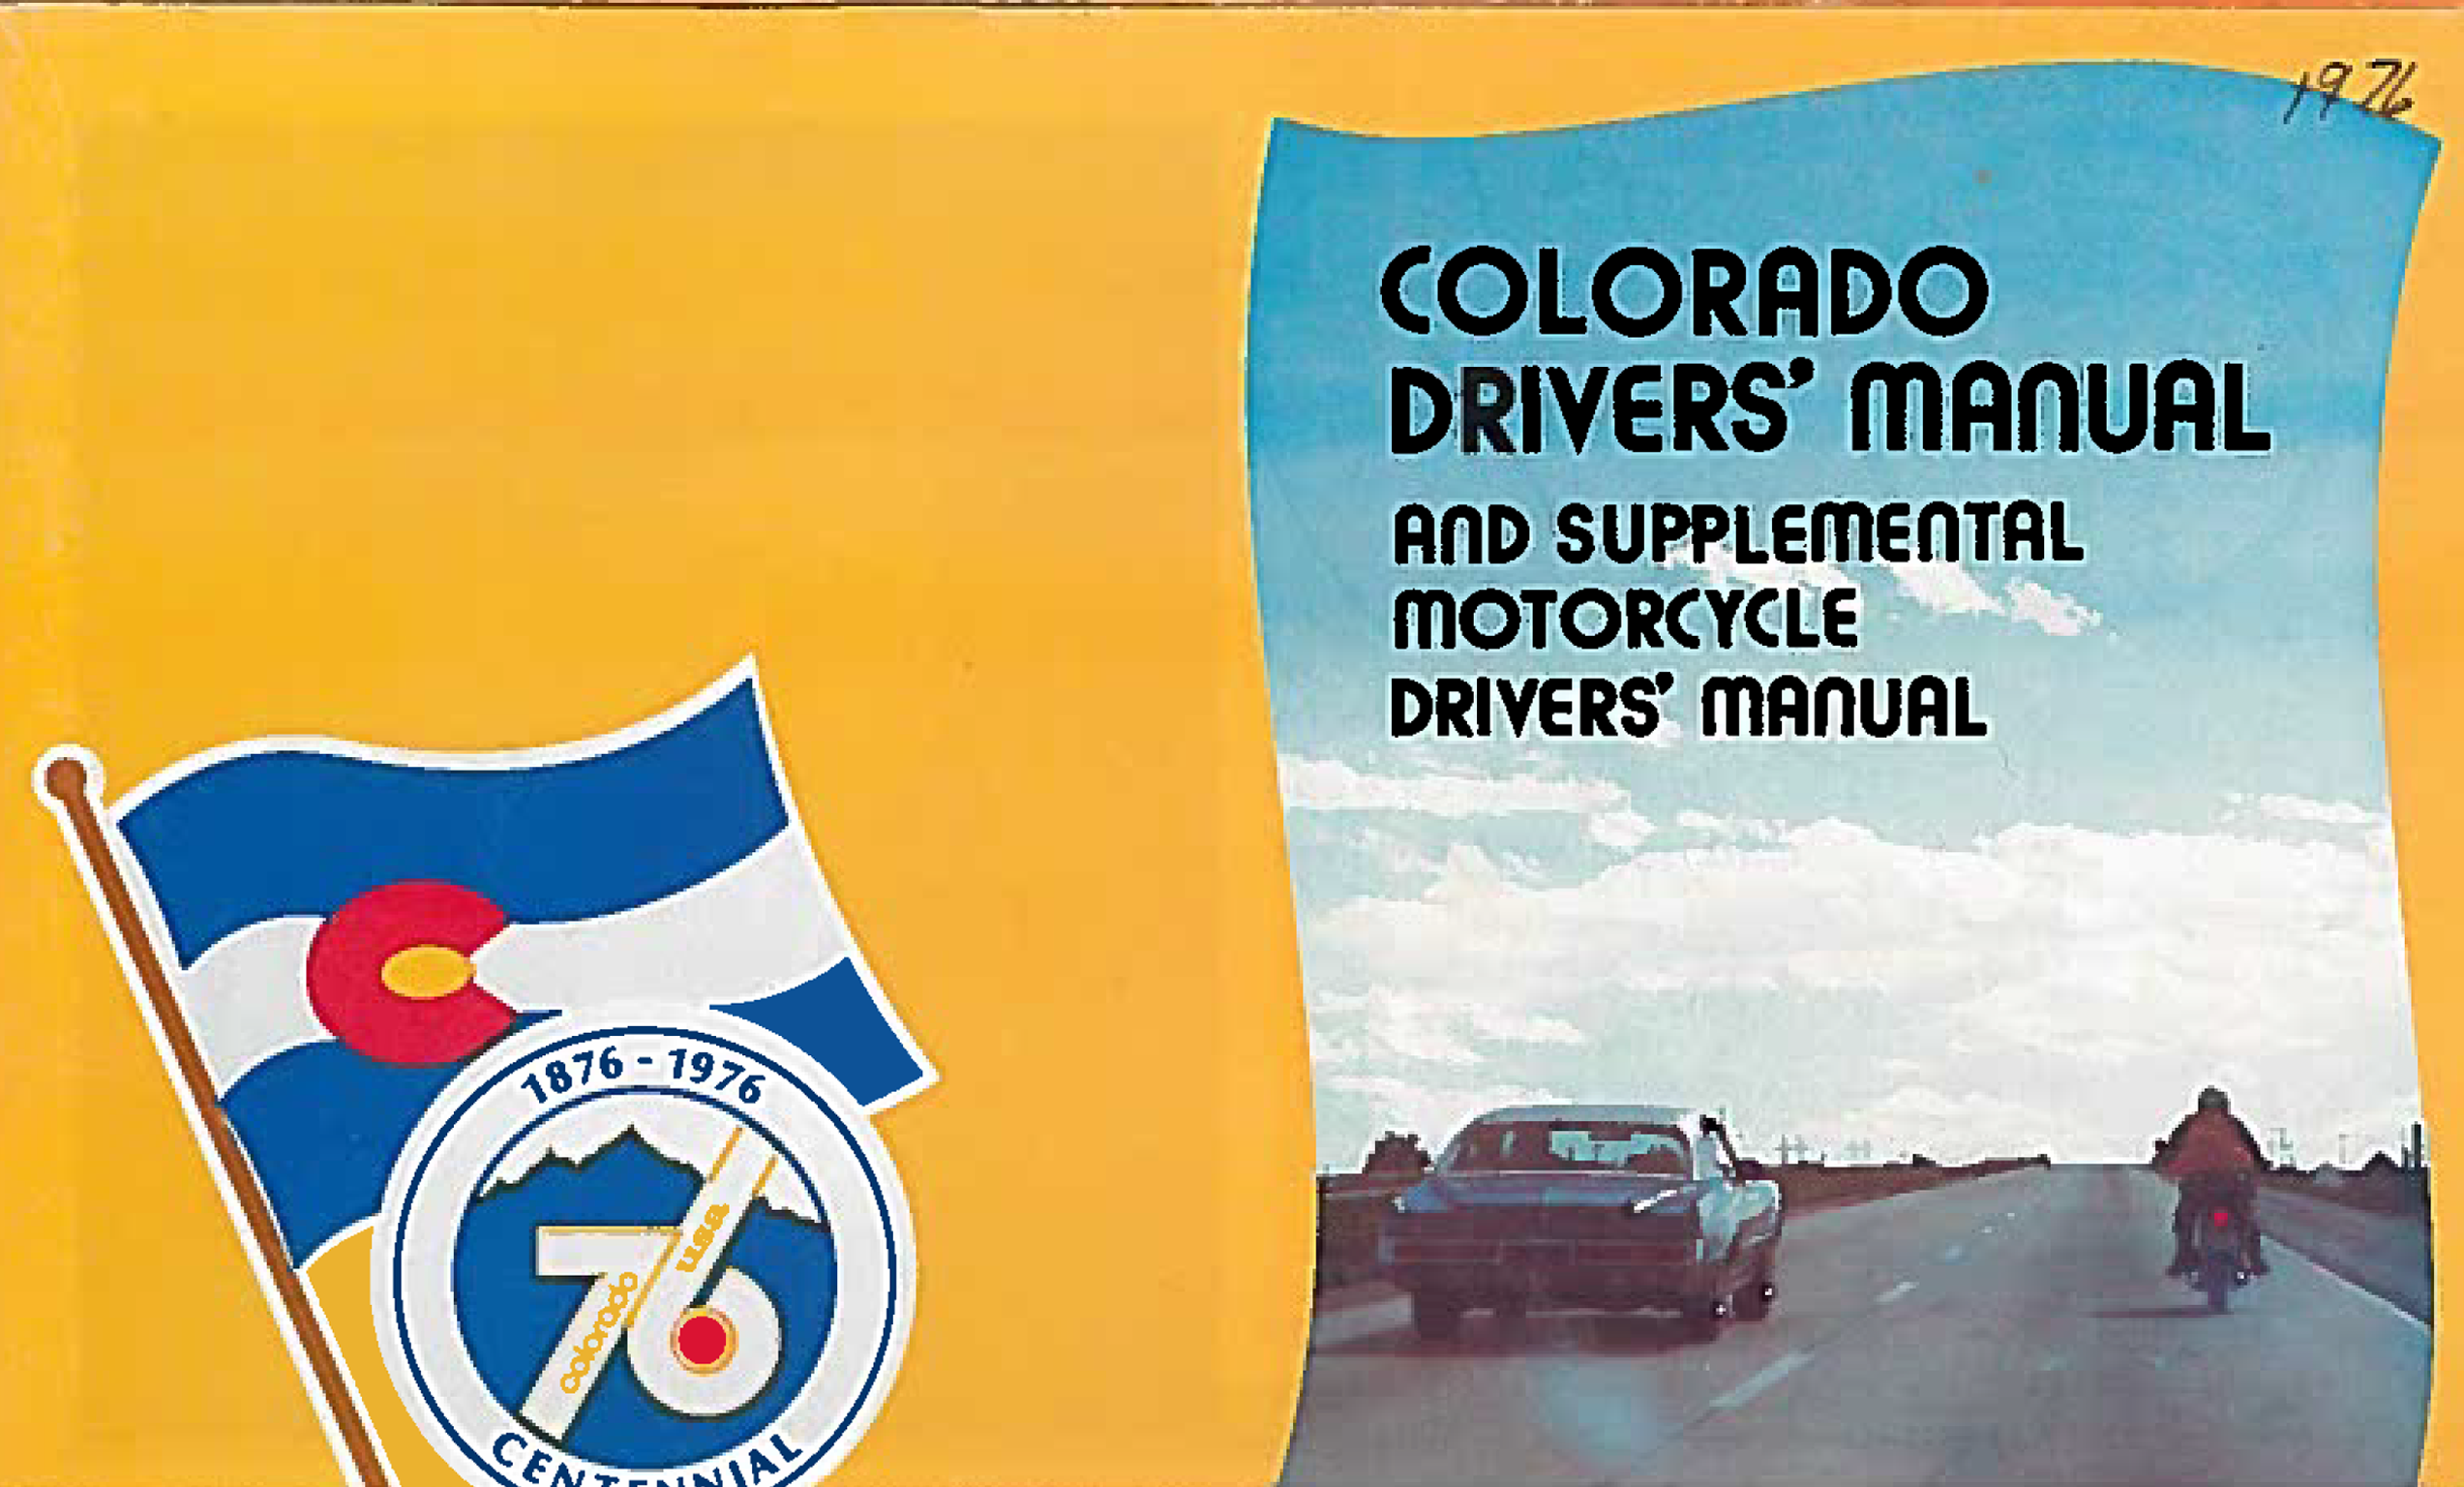 "Colorado Drivers' Manual and Supplemental Motorcycle Drivers' Manual."